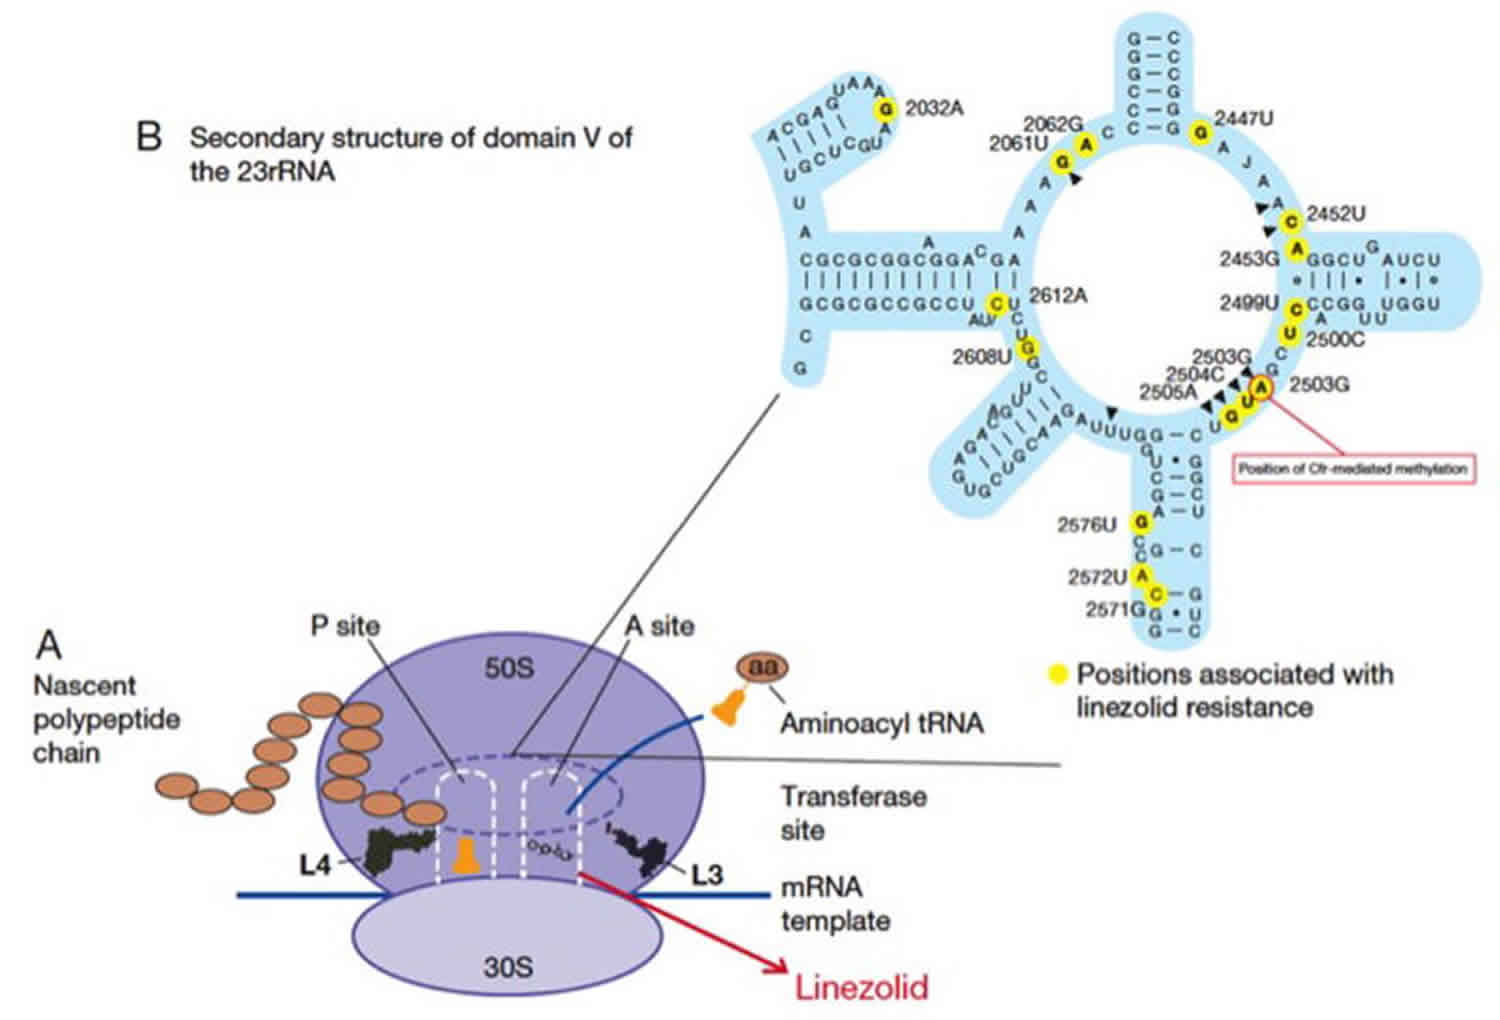 mechanism of antibiotic resistance - mutations of the target site